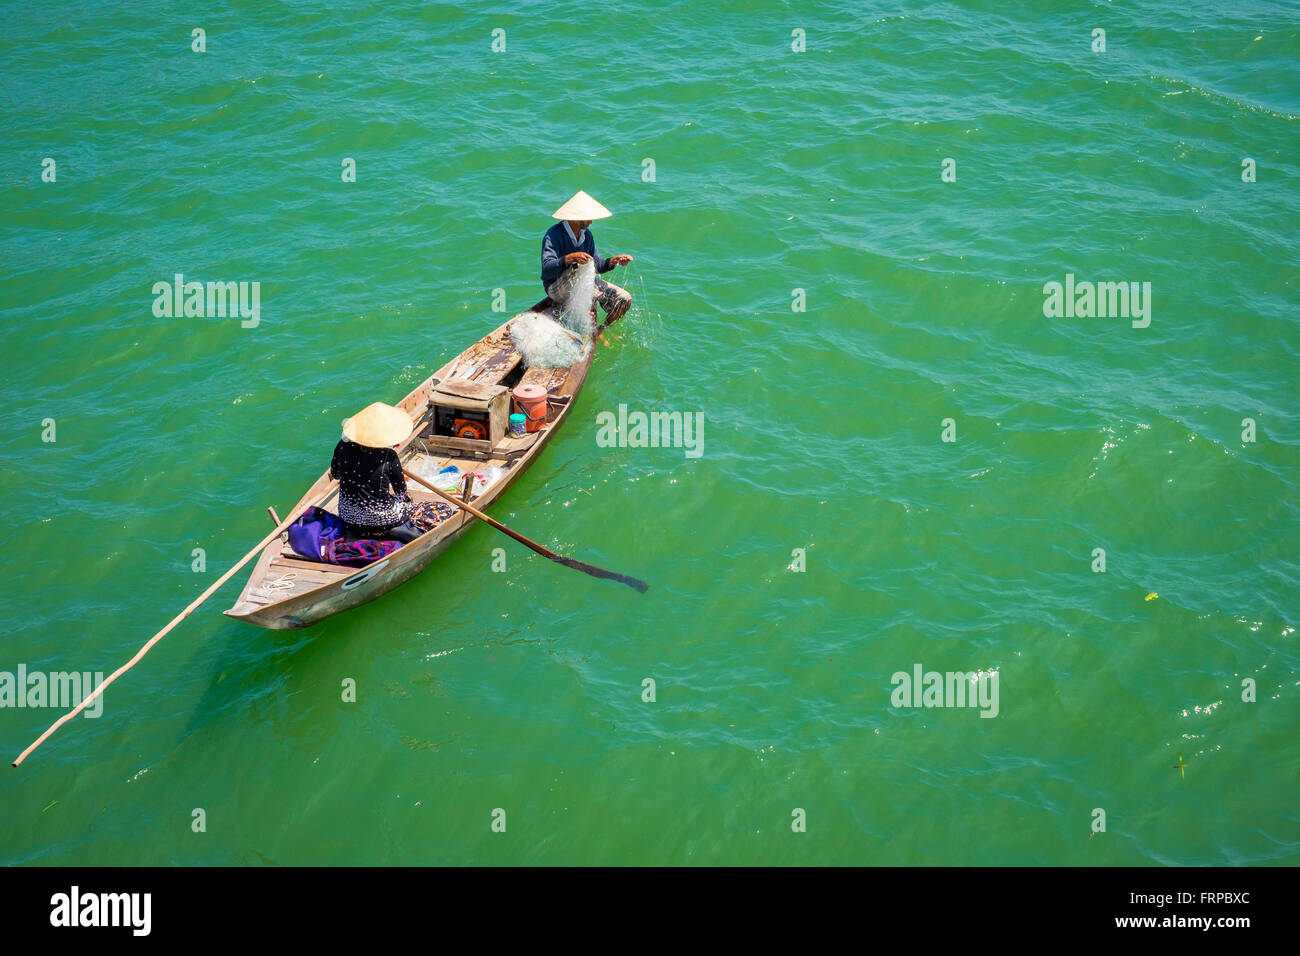 Vietnamese man fishing on the Thu Bon River, Hoi An, Vietnam Stock Photo